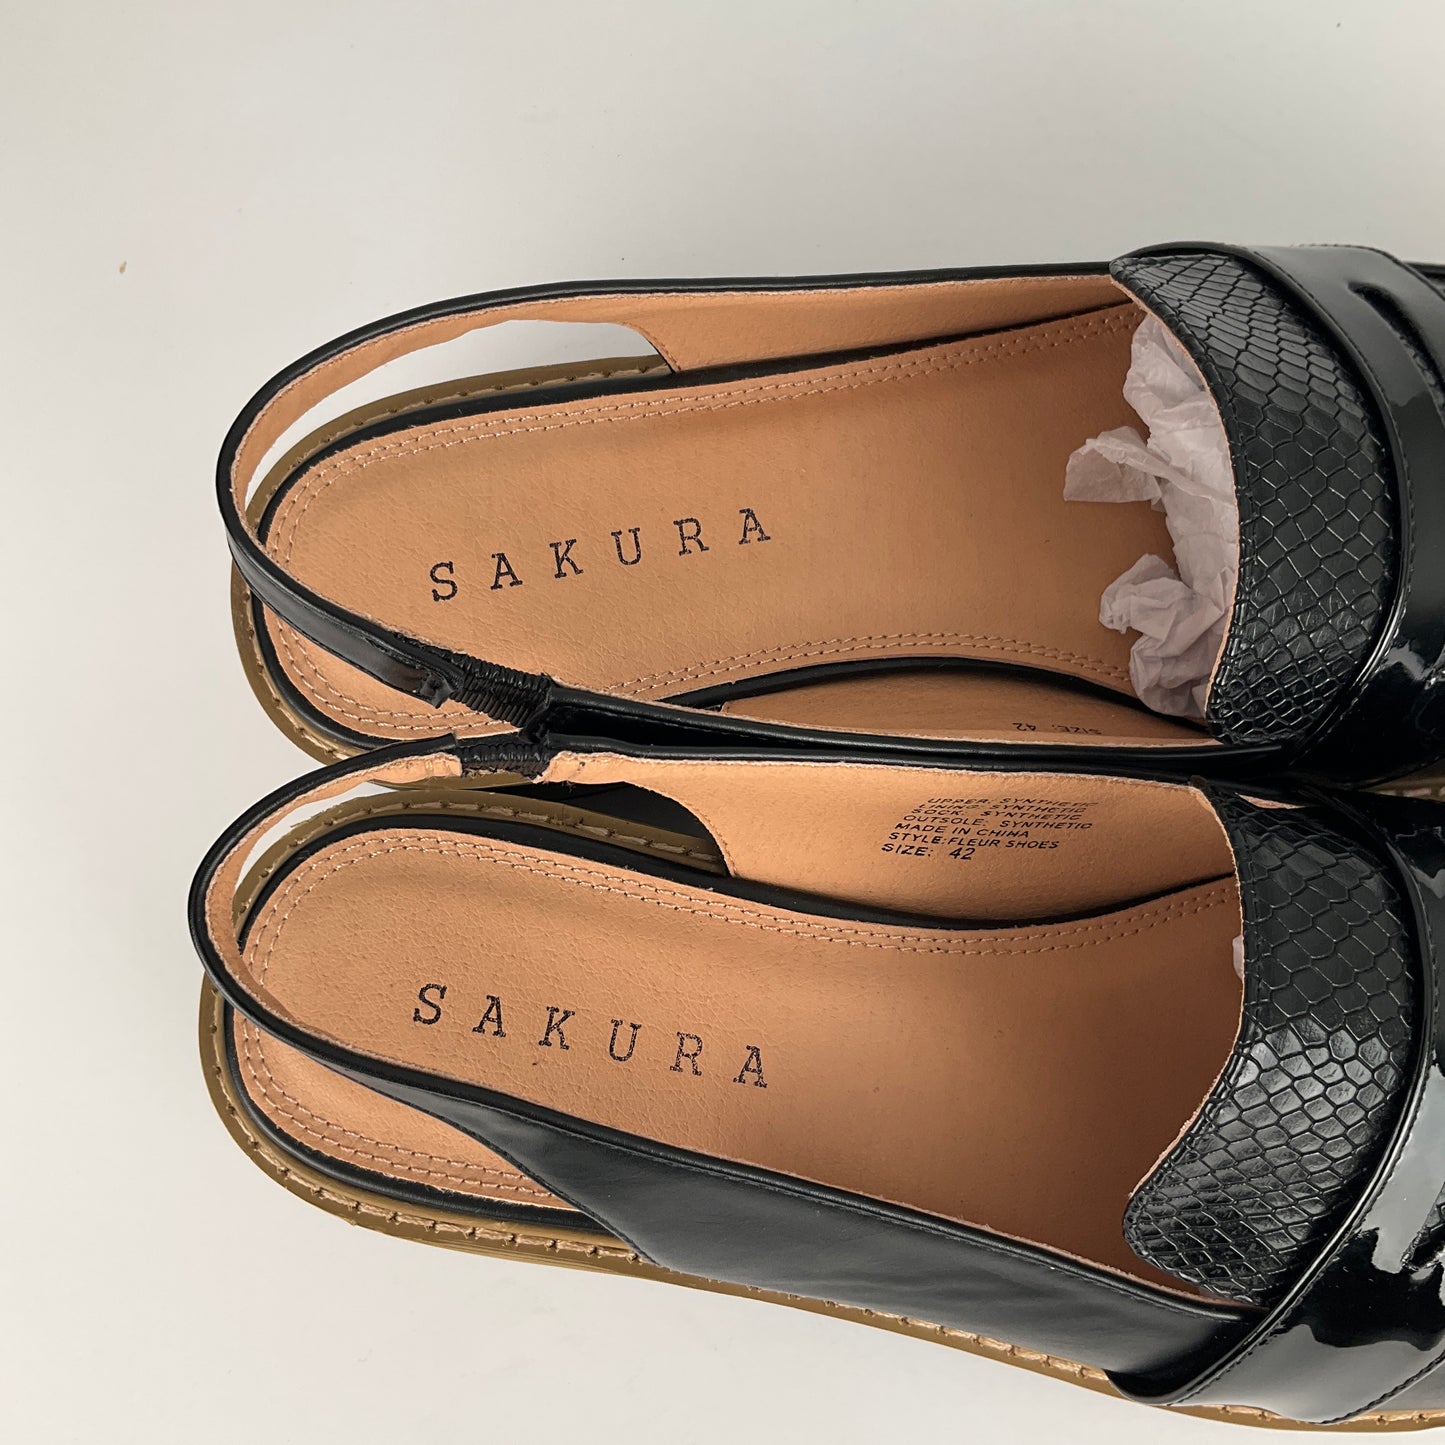 Sakura - Fleur shoes - Size 42